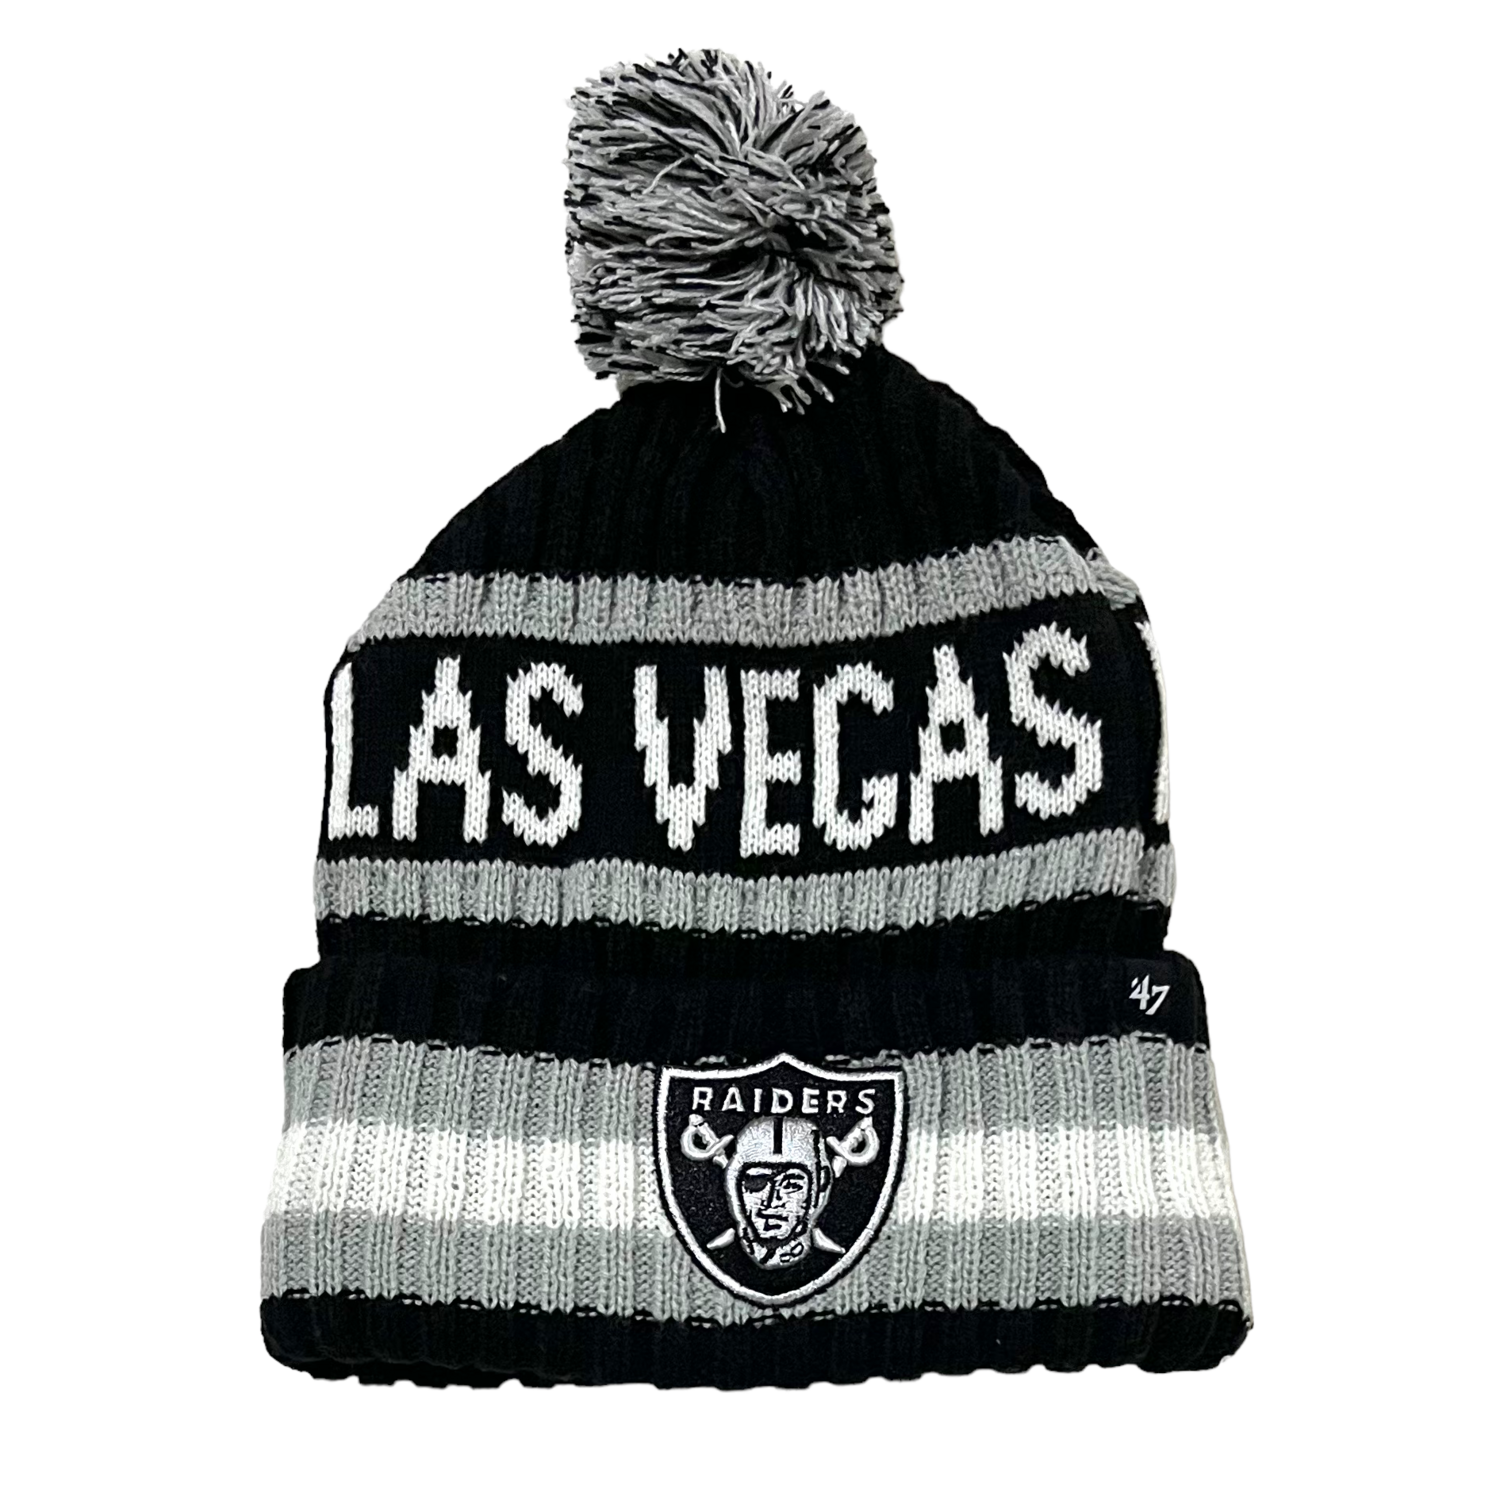 Las Vegas Raiders Men's 47 Bering Cuffed Pom Knit Hat